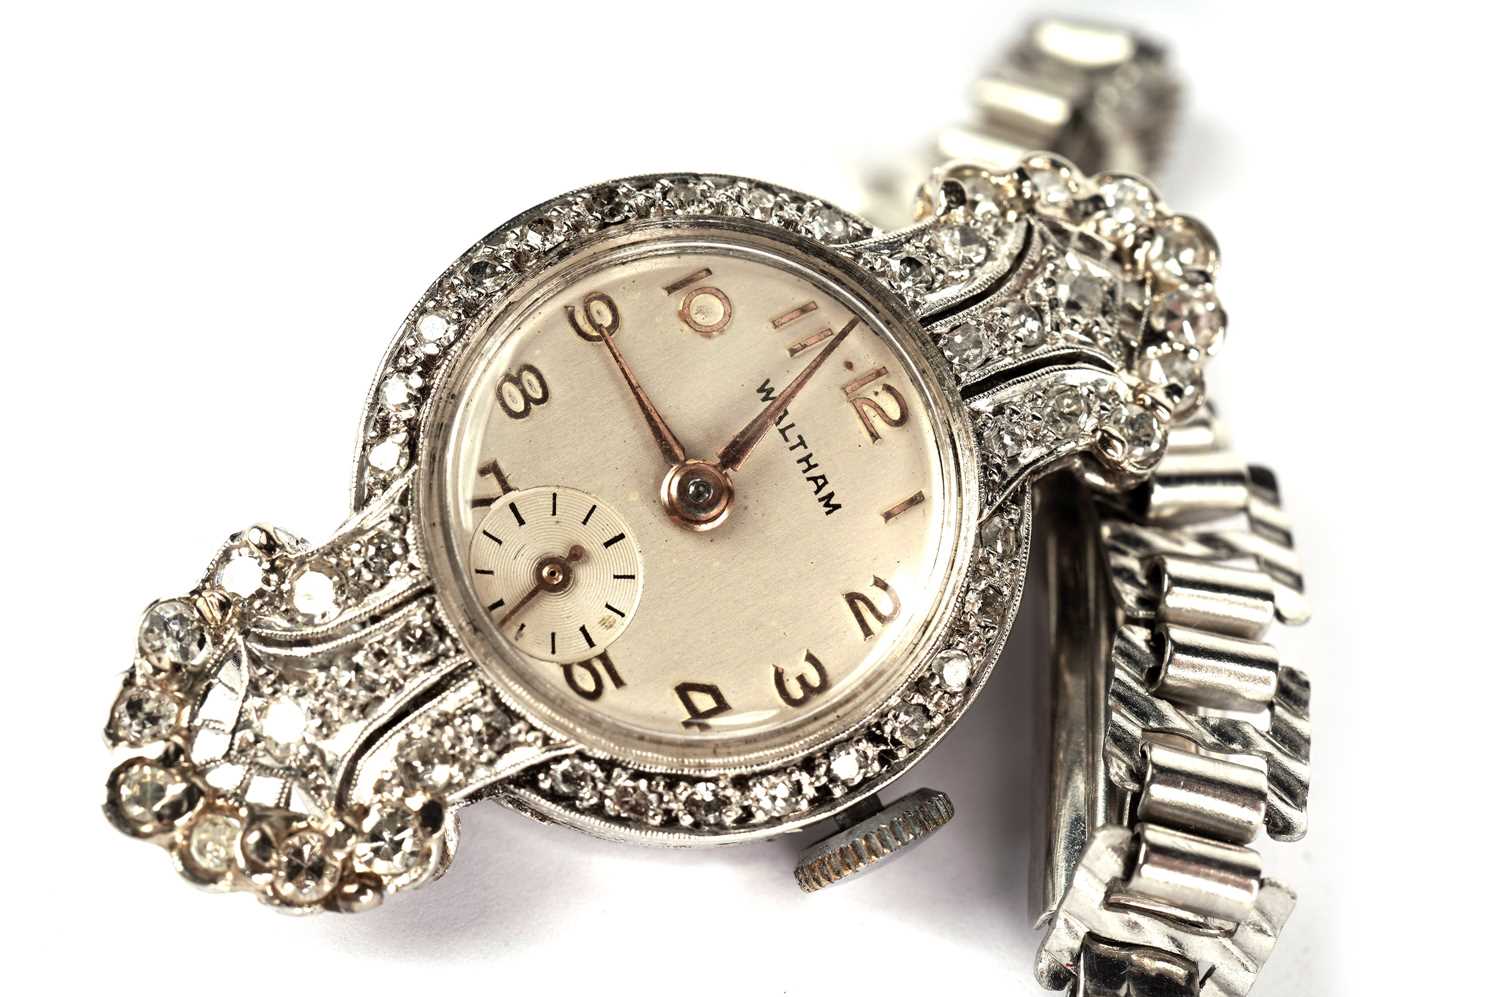 A Waltham diamond set cocktail watch - Image 3 of 4